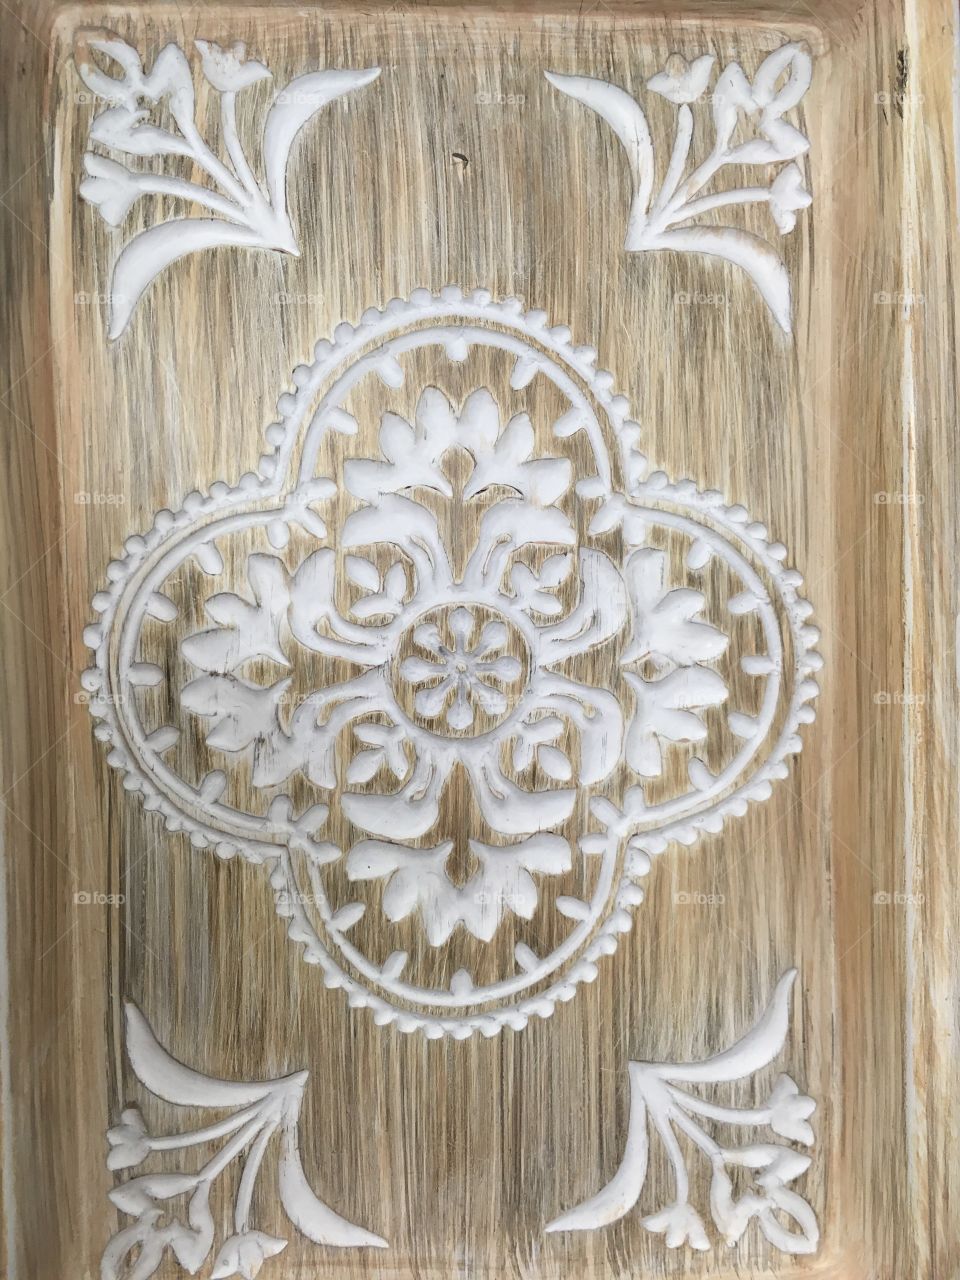 Flower design on wood